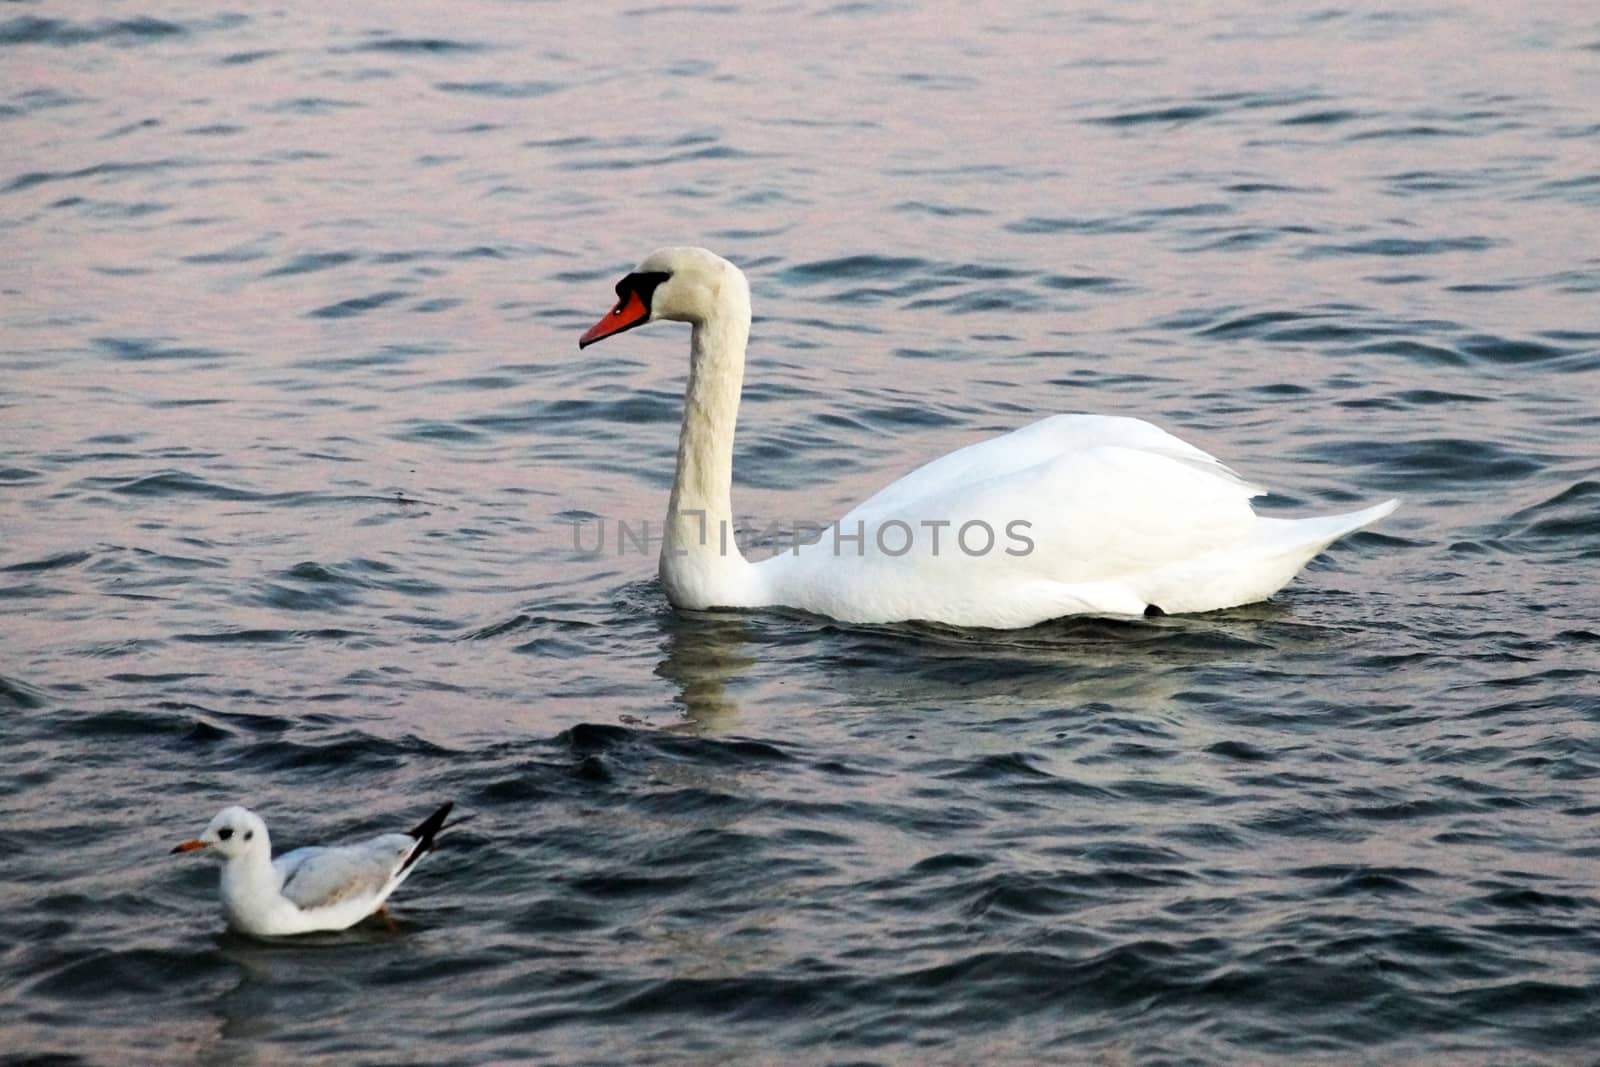 white swan blows on water between stones.